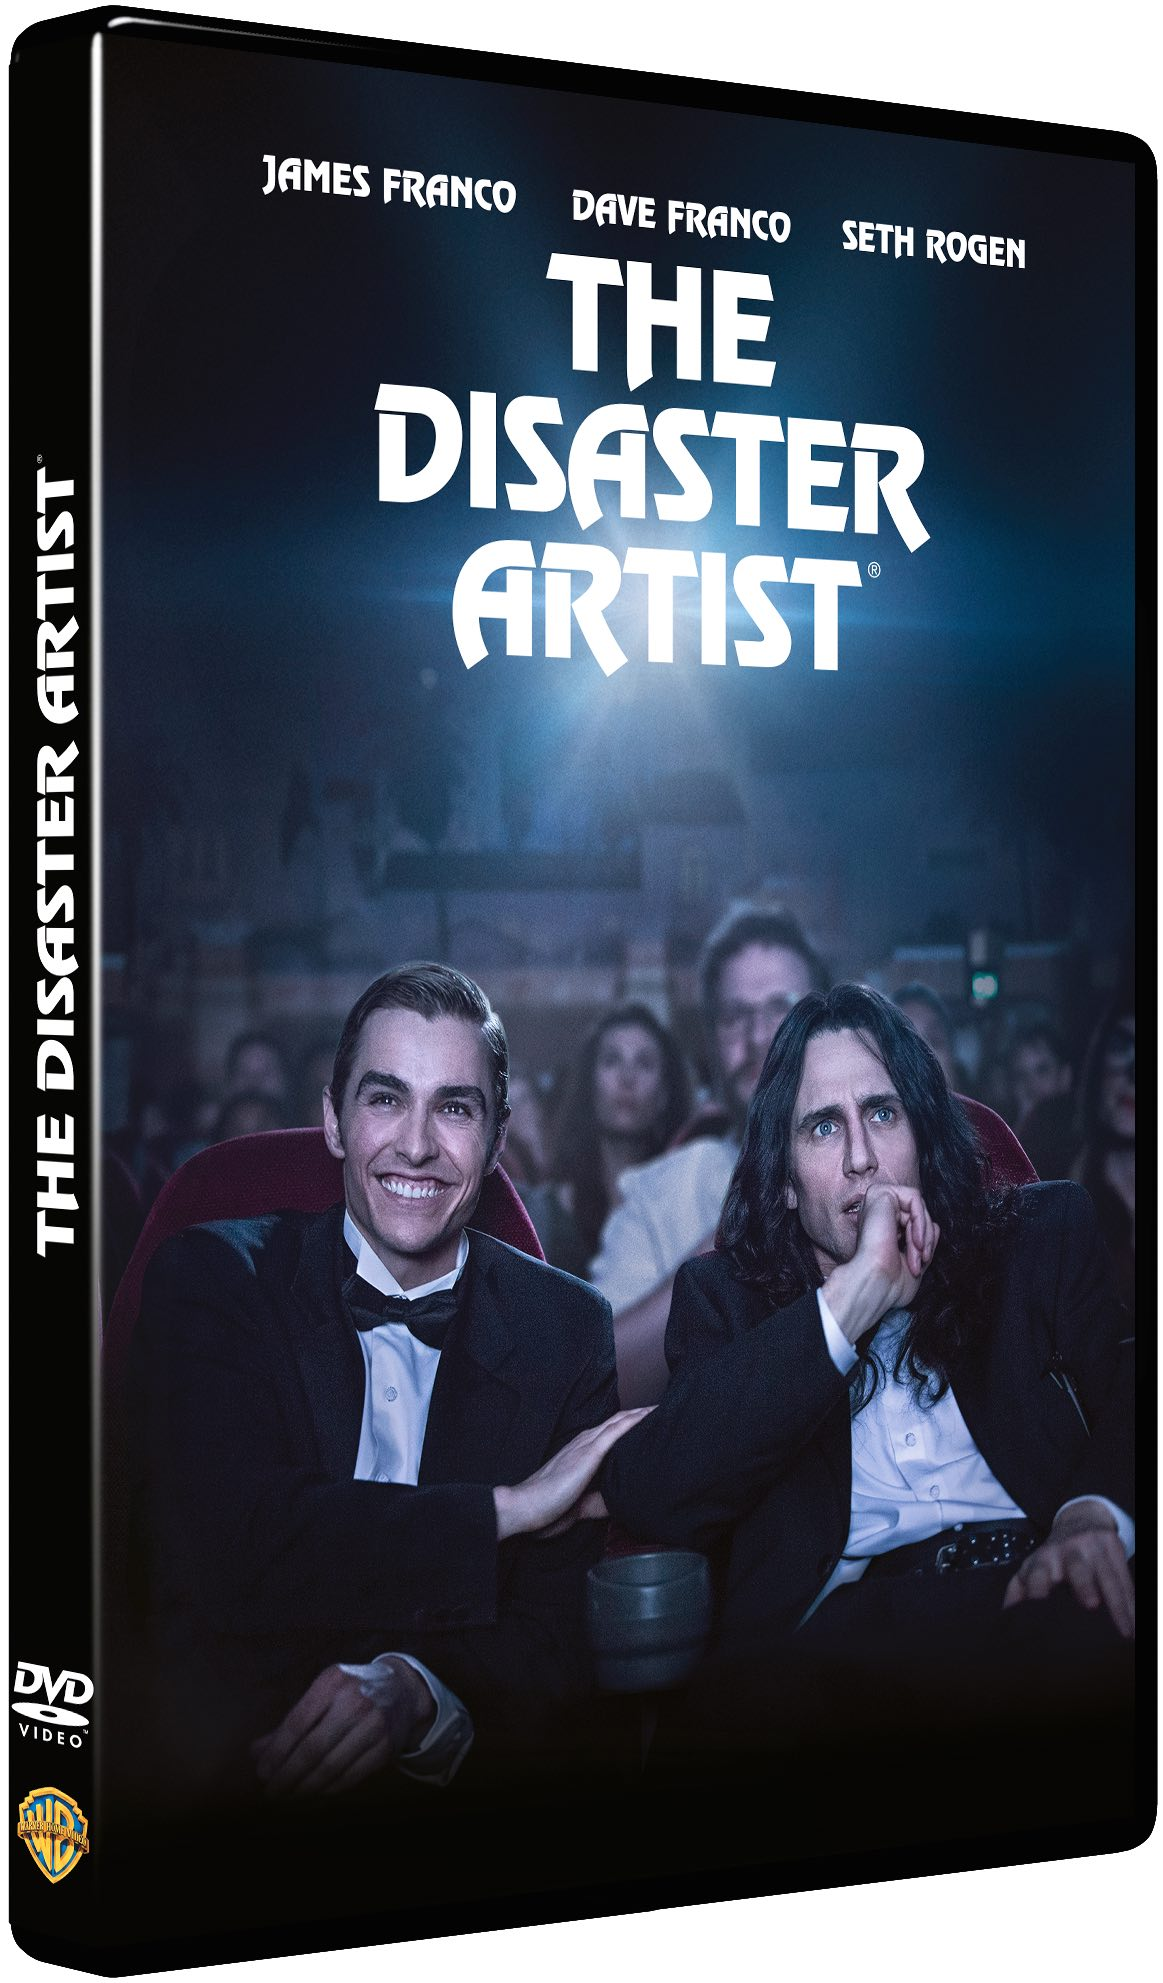 Disaster artist (The)